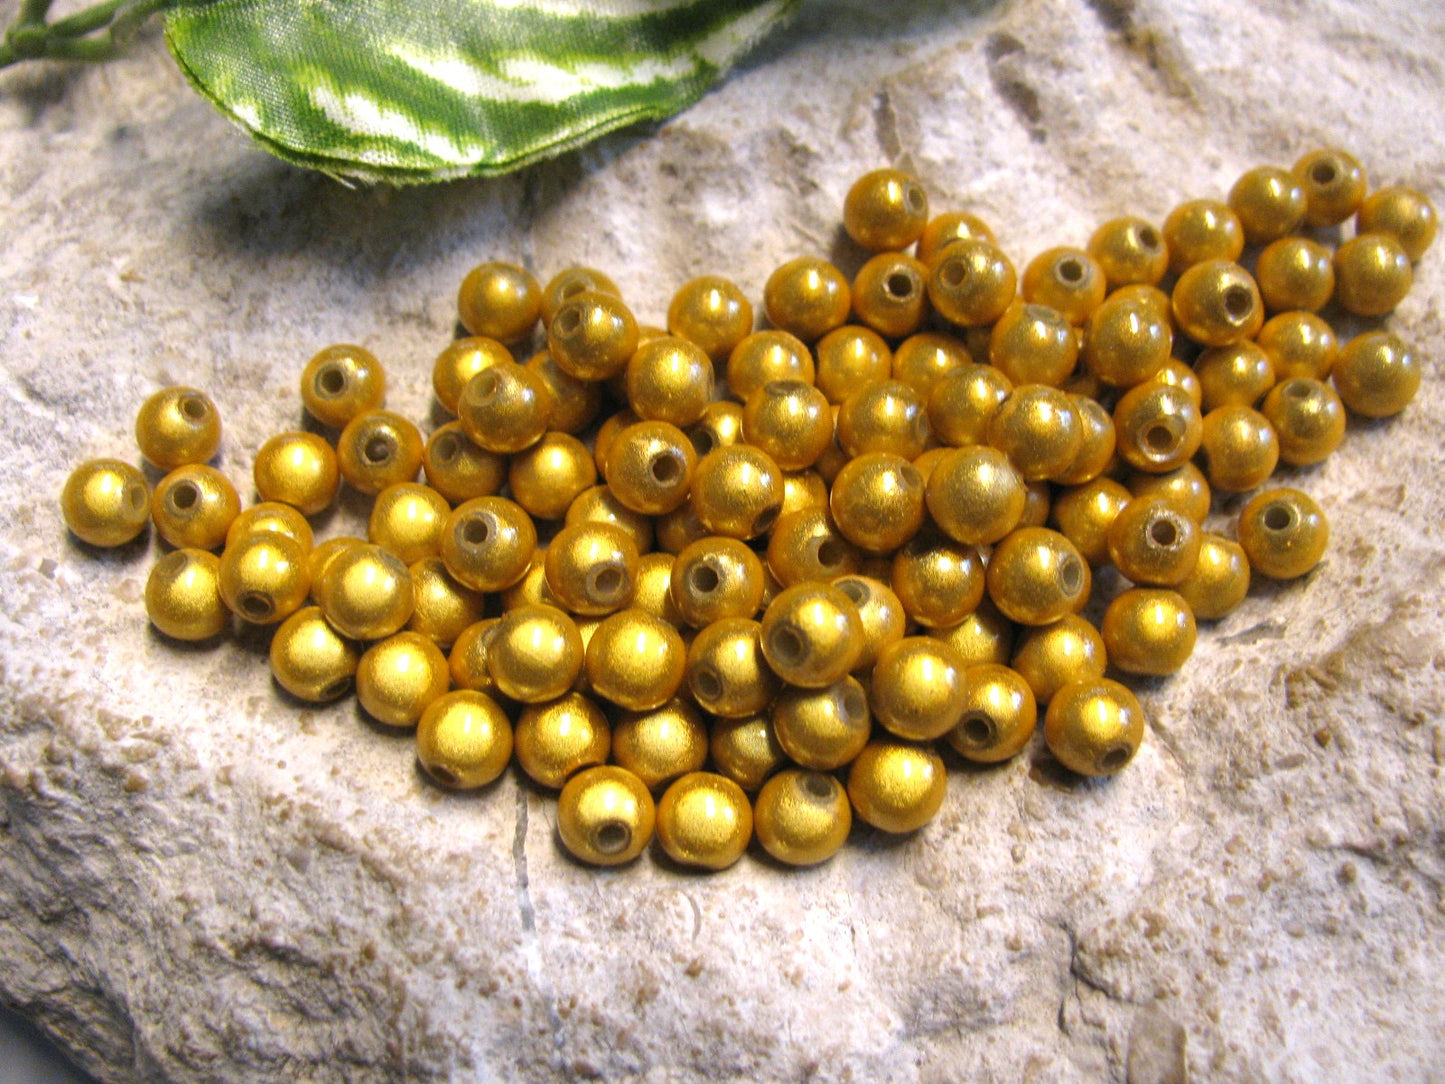 60, 120, 180 oder 300 Miracle Beads 6mm goldgelb Perlen basteln Schmuck machen